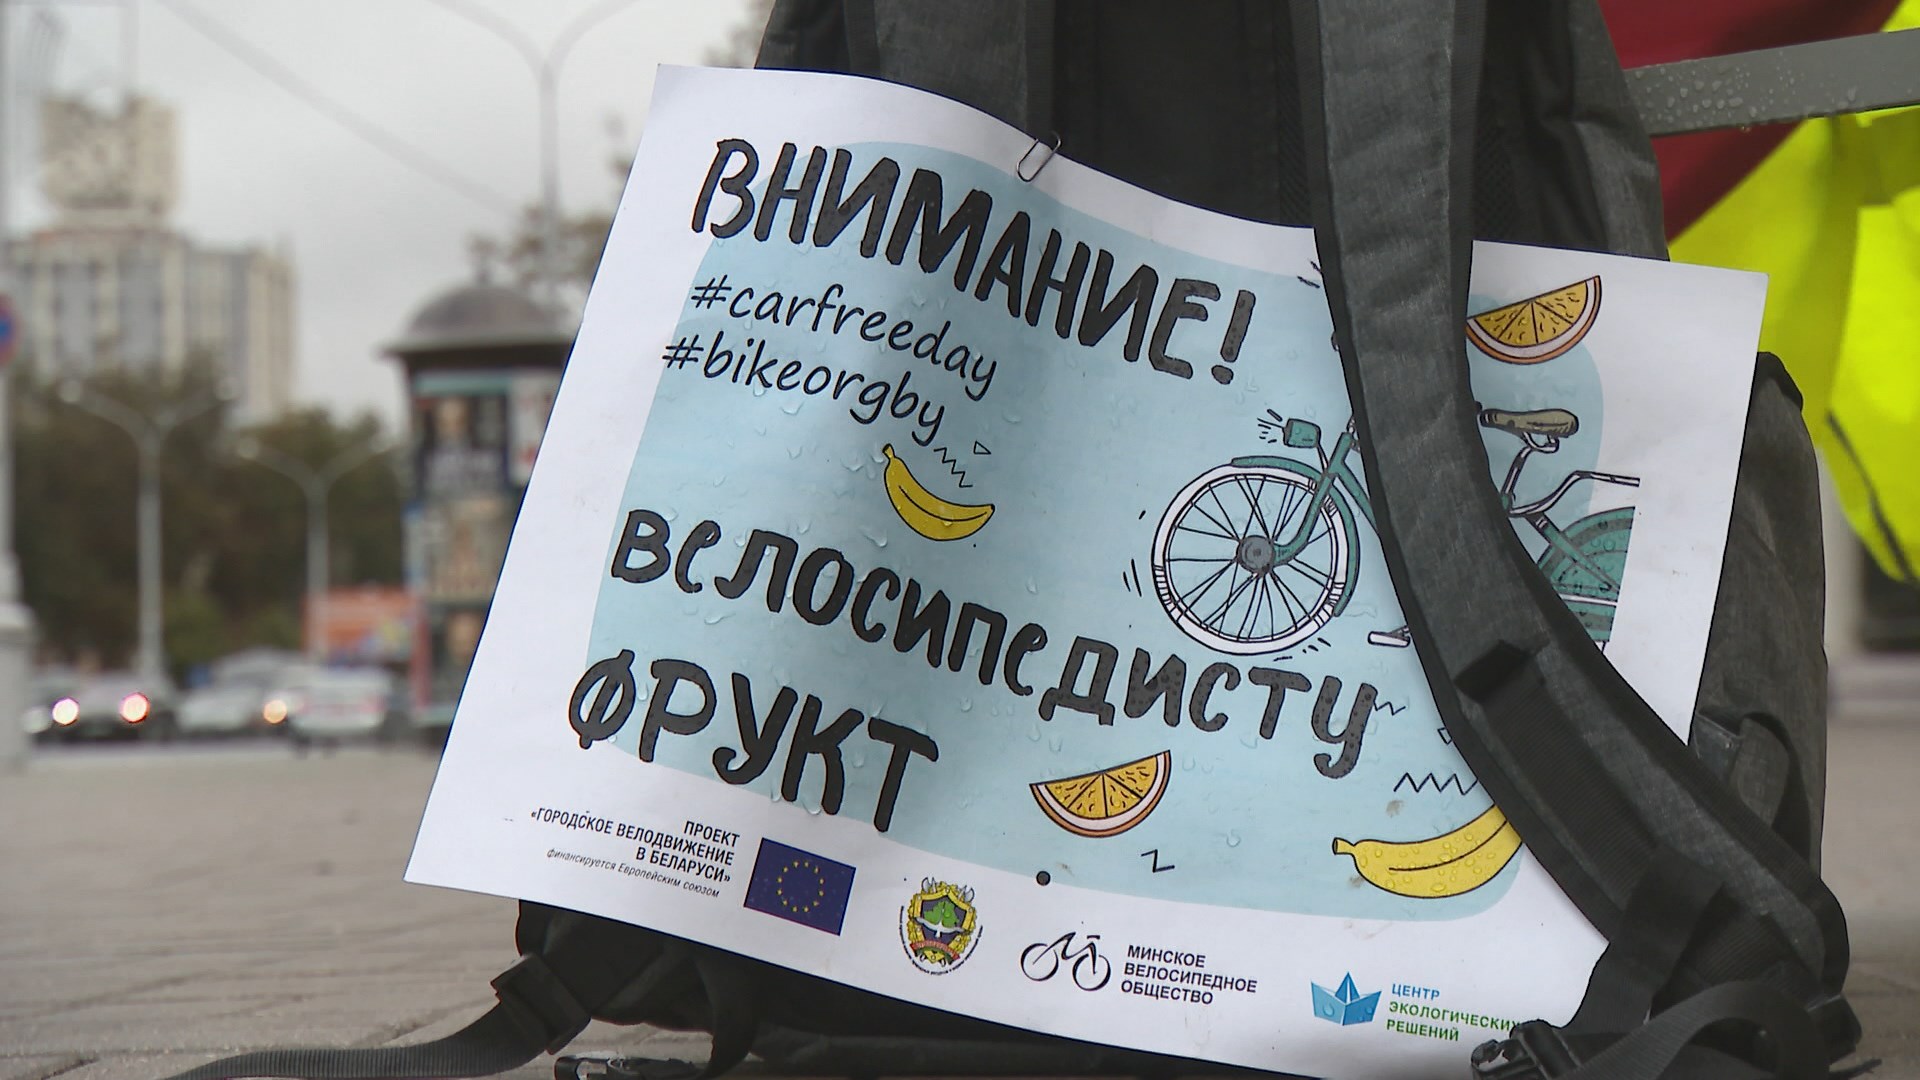 Belarus hosting World Car Free Day